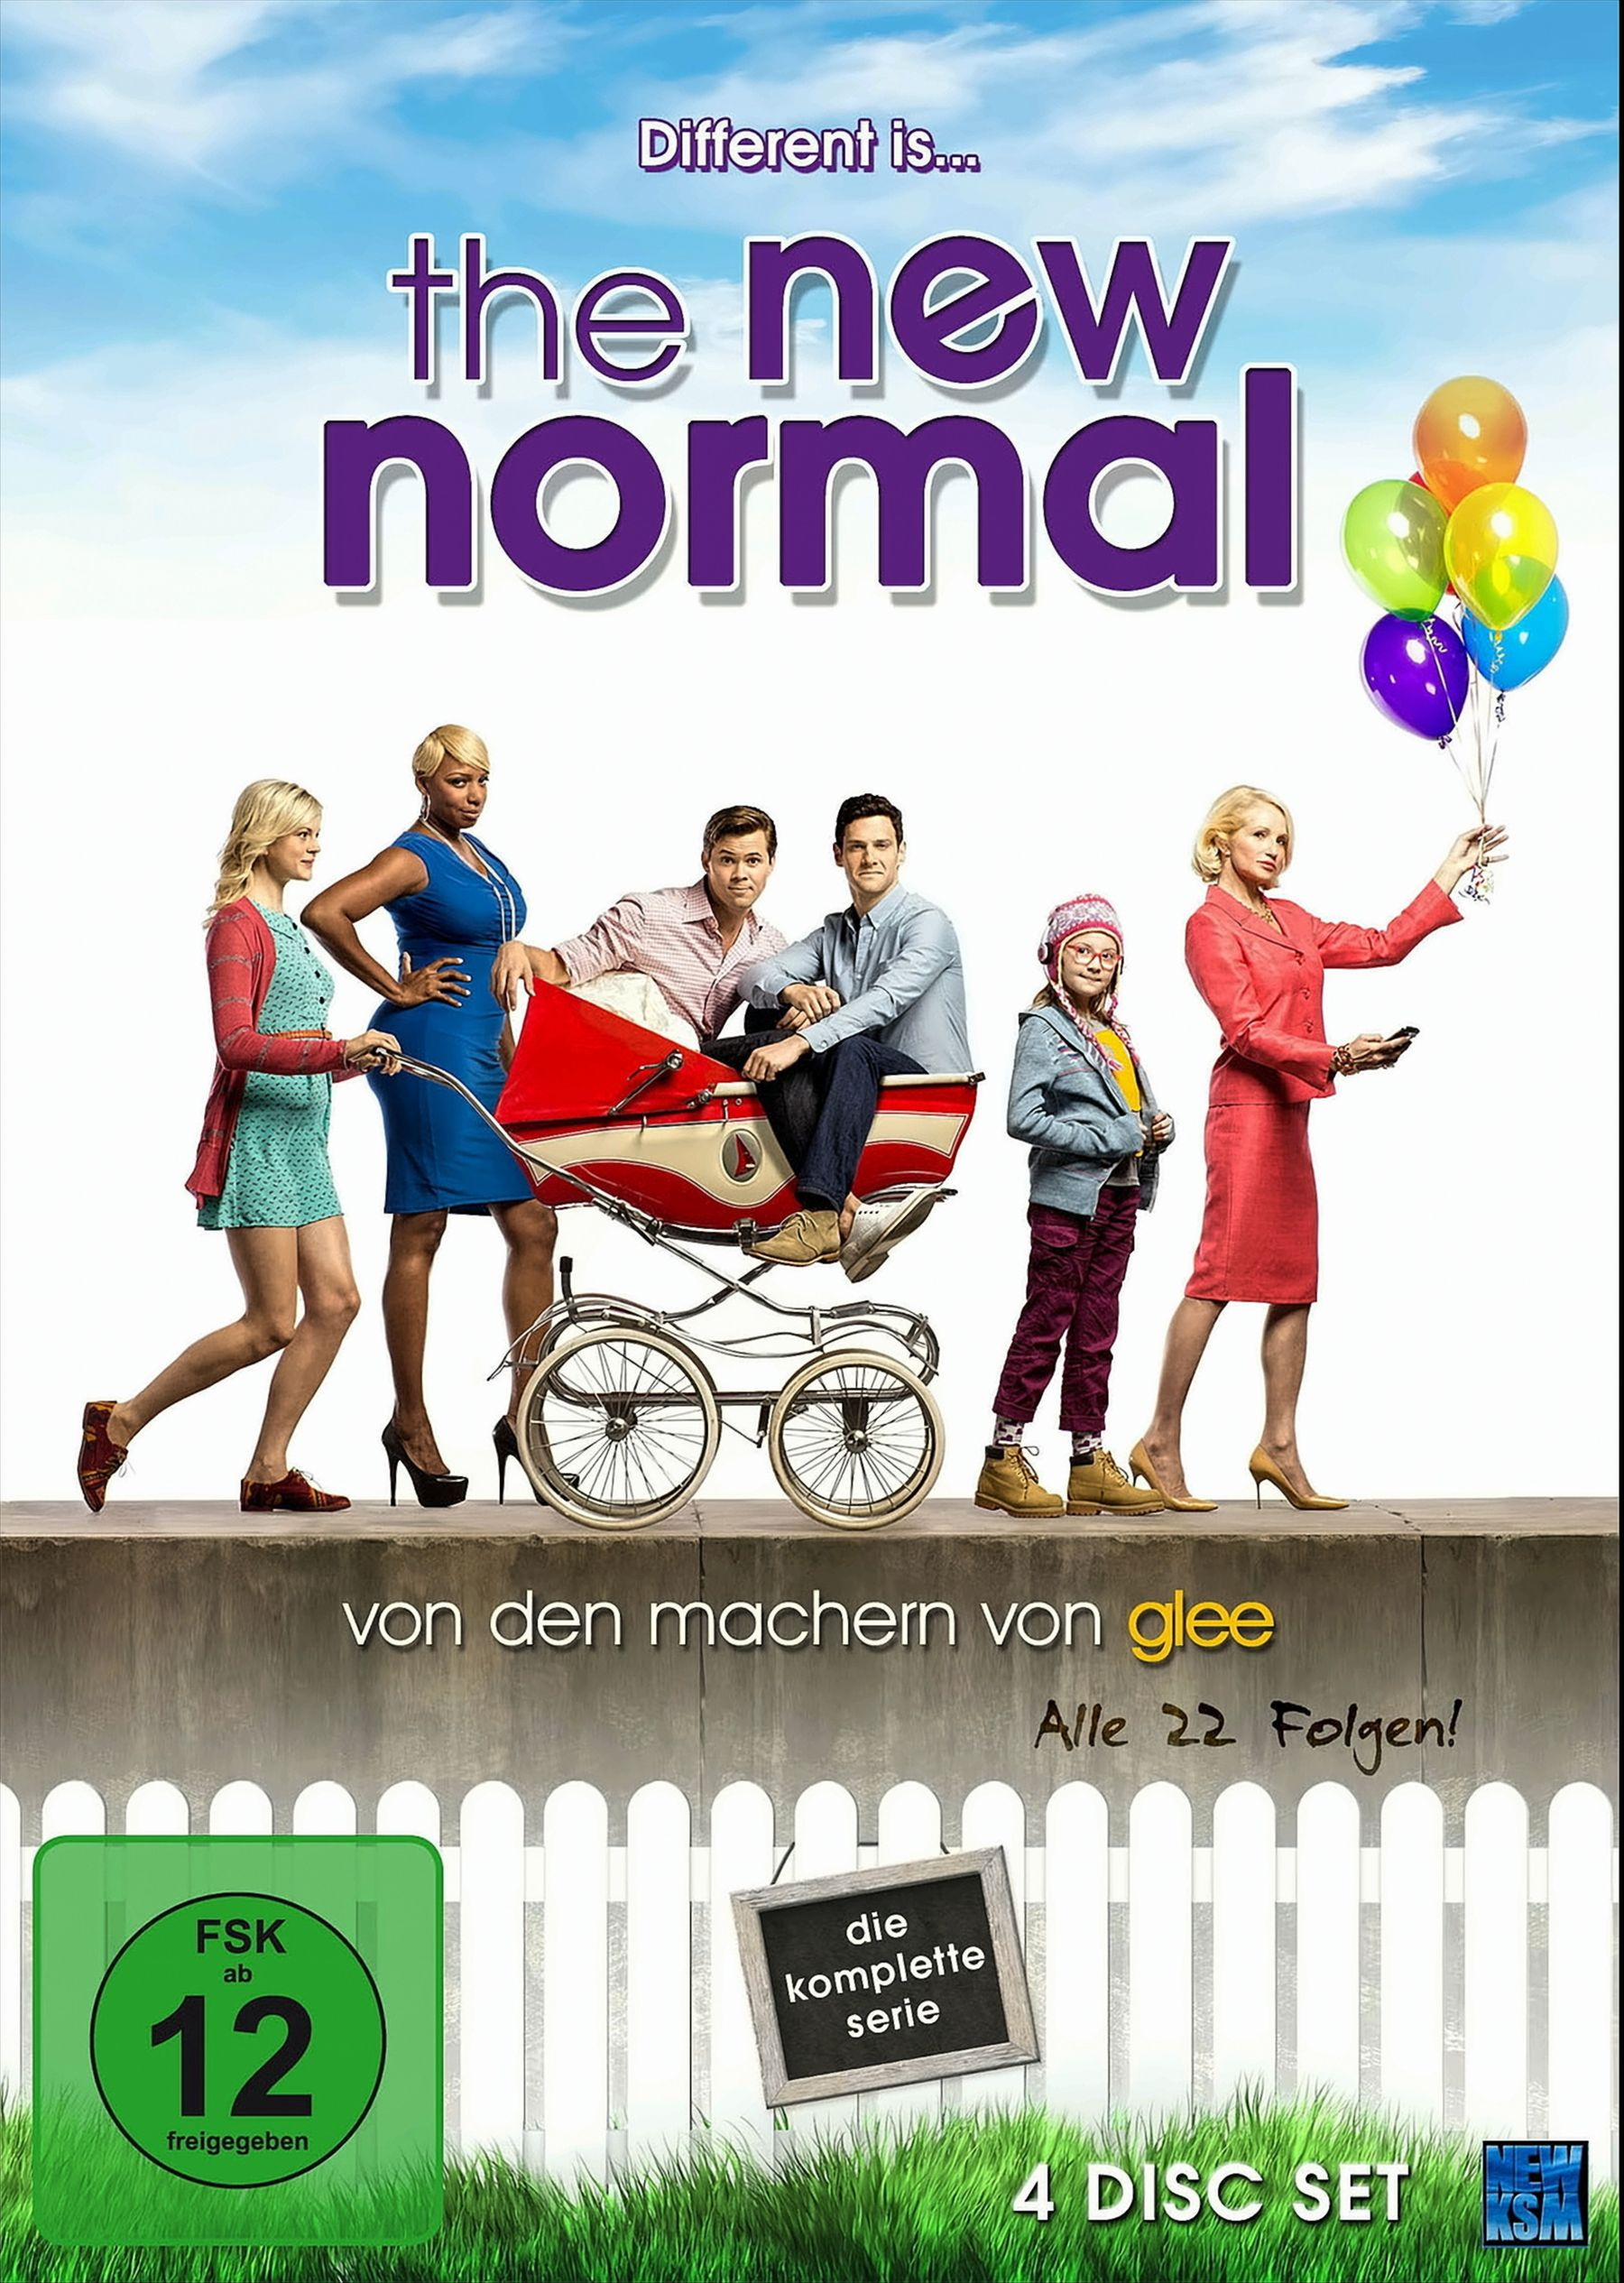 The (4 Die komplette Serie New Normal Discs) - DVD